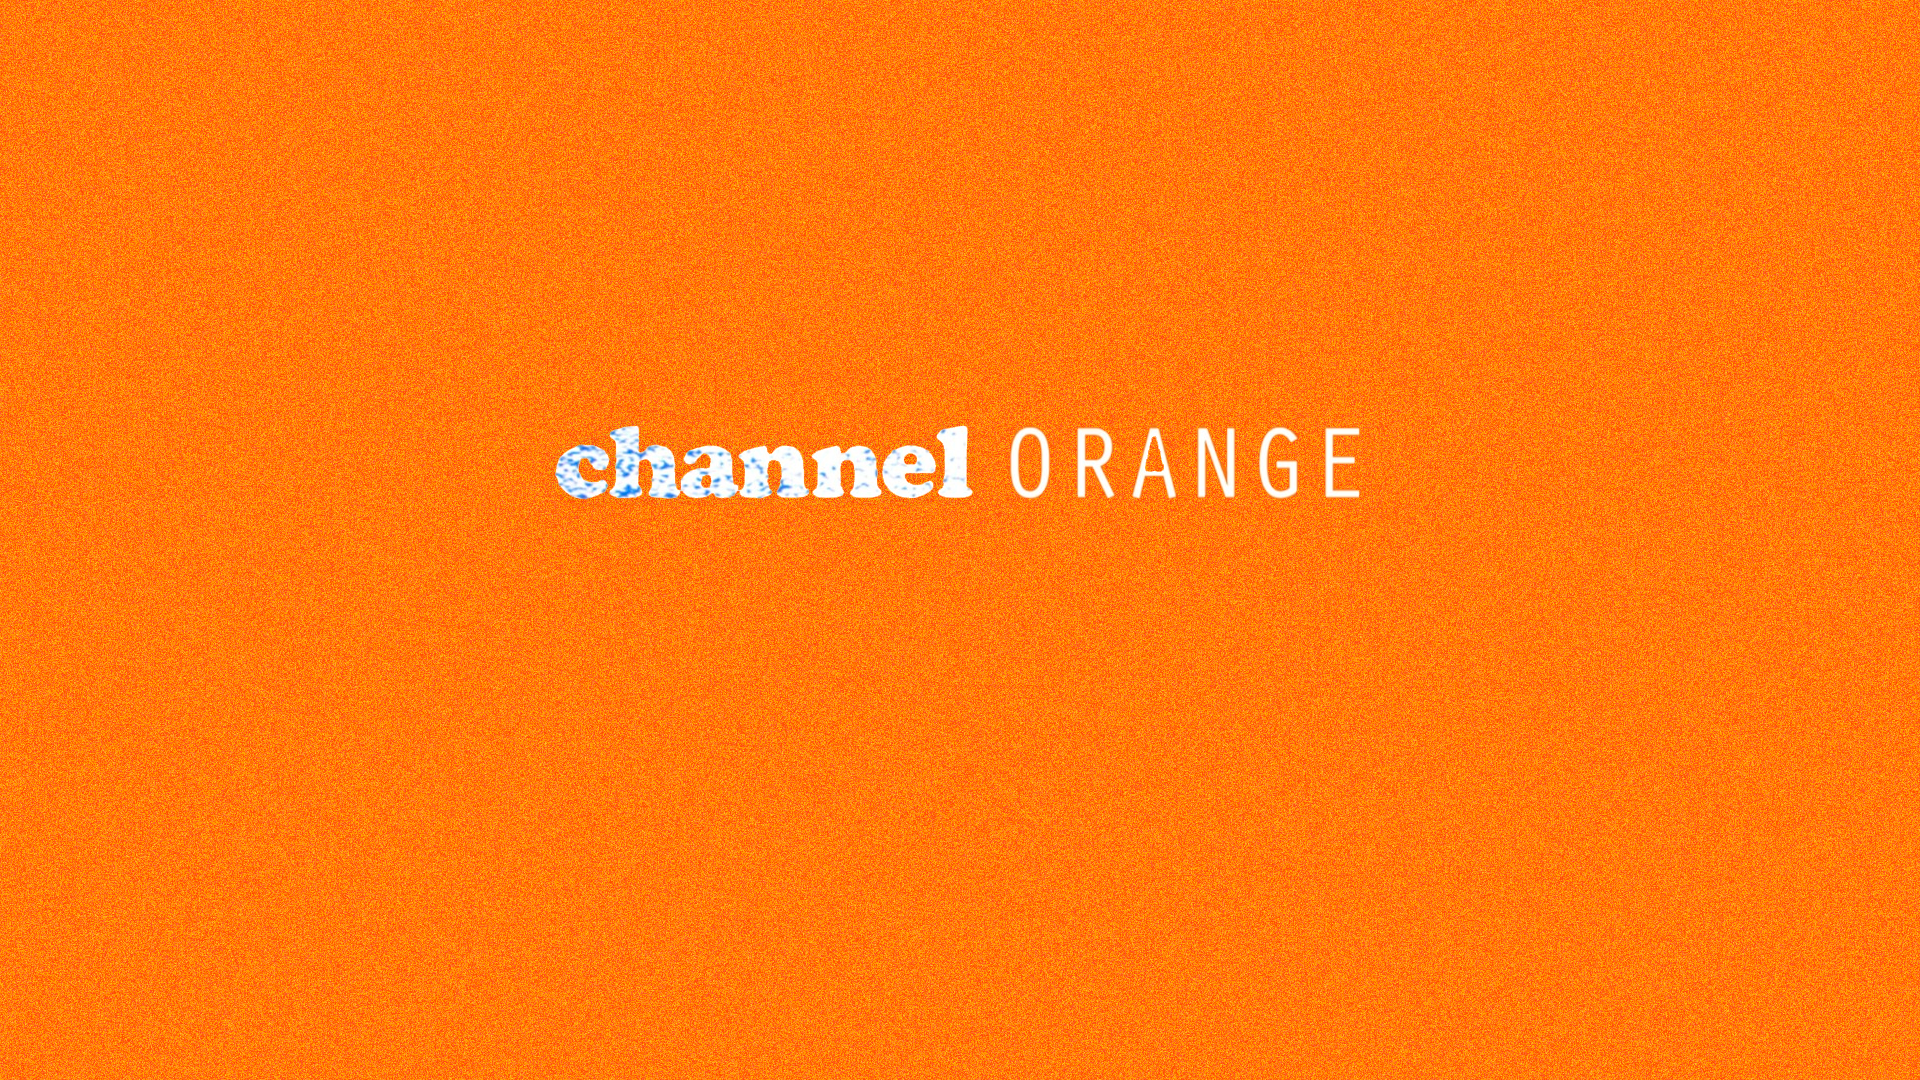 Best 45+ Channel Orange Wallpapers on HipWallpapers.